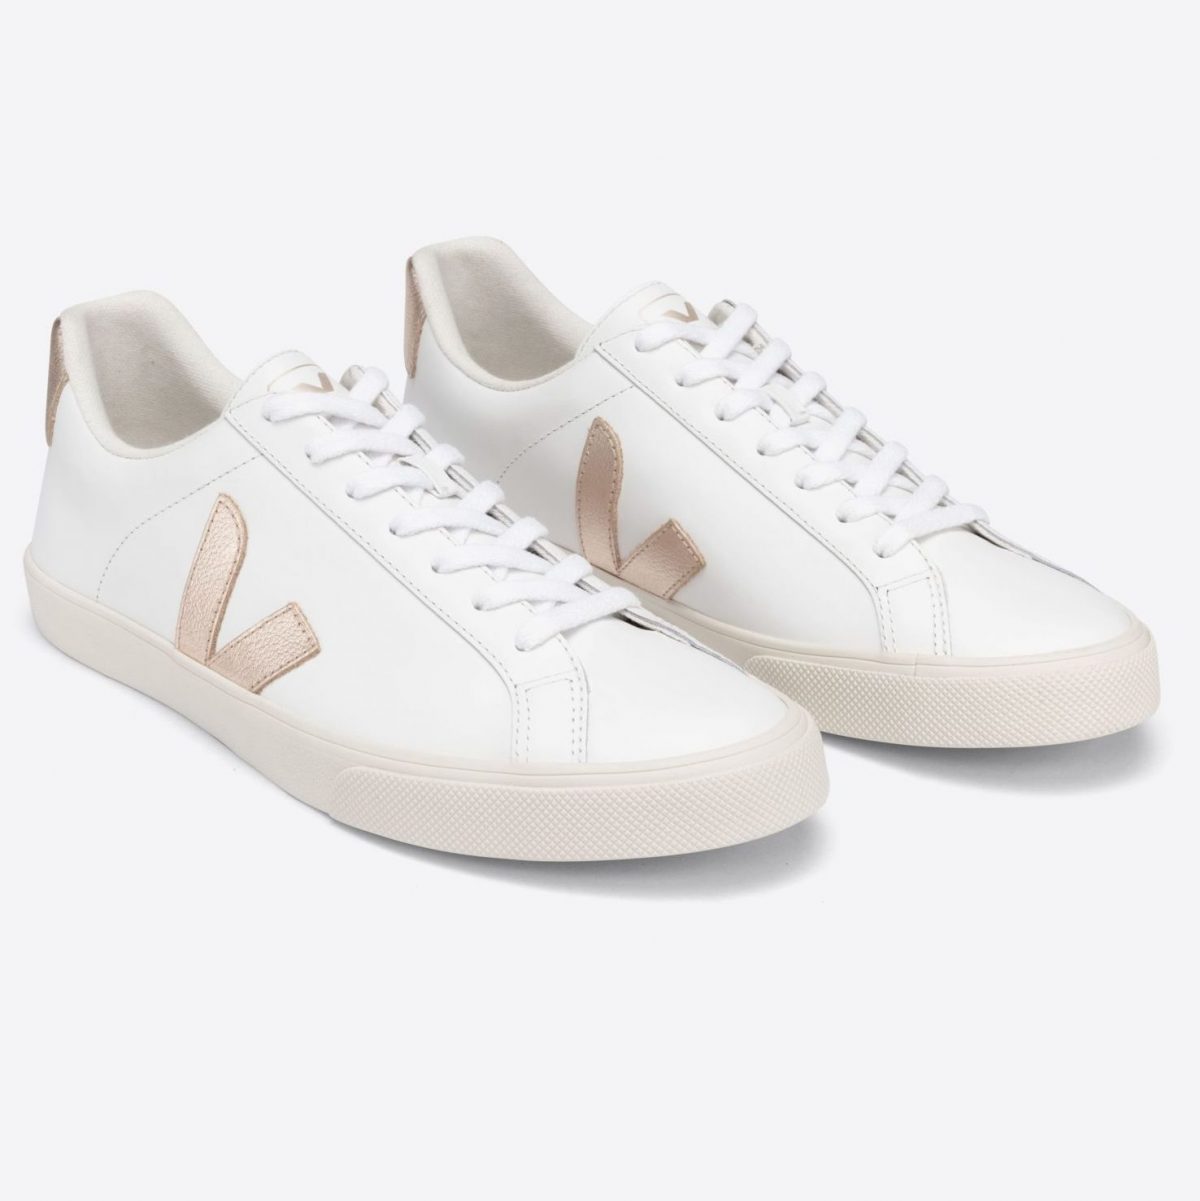 Veja Esplar Sneakers, White with a rose gold V logo on the side.